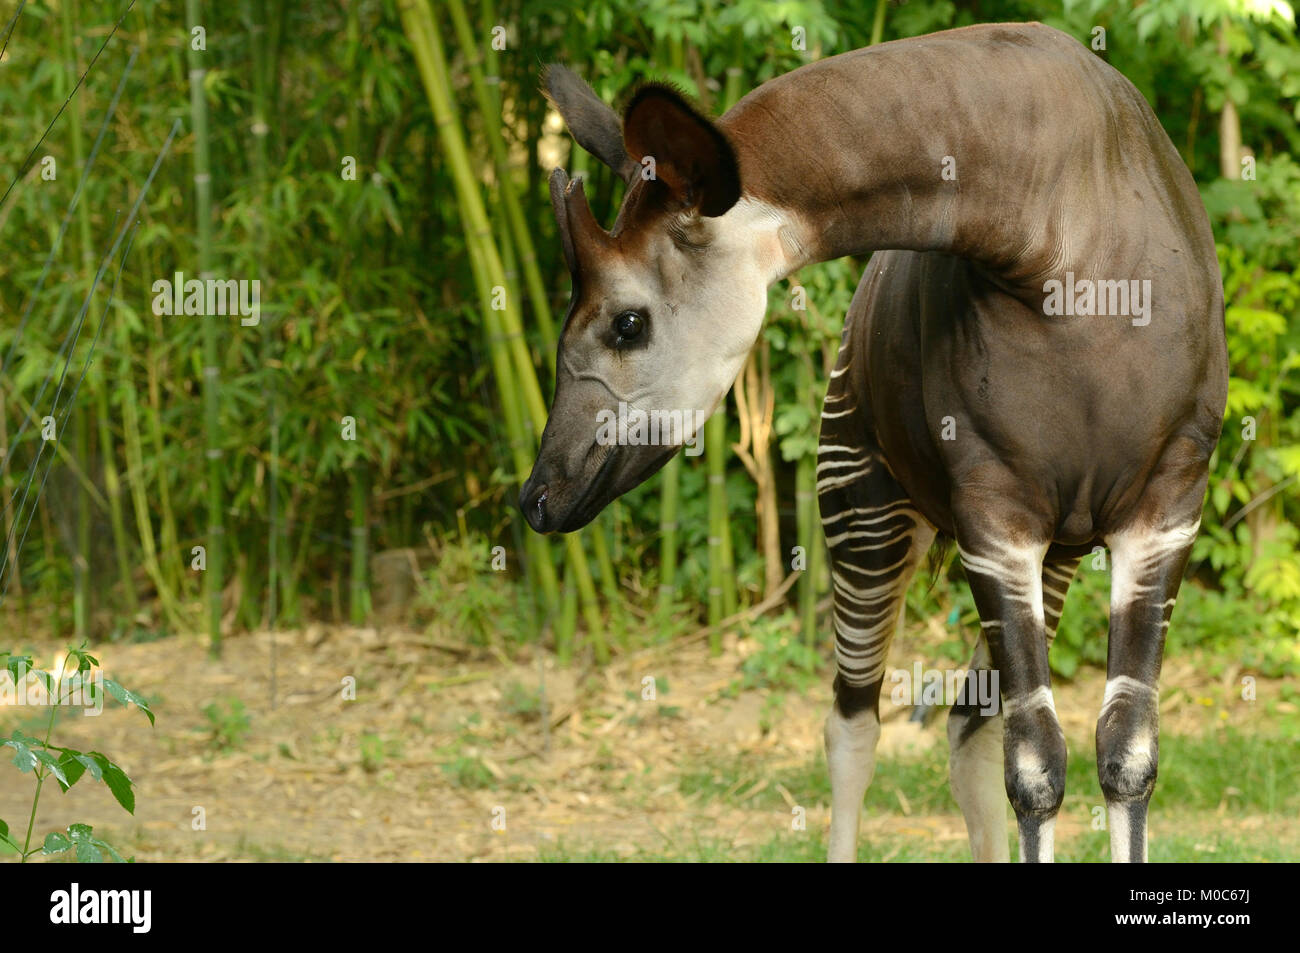 Okapi Okapia johnstoni Endangered species Captive Stock Photo